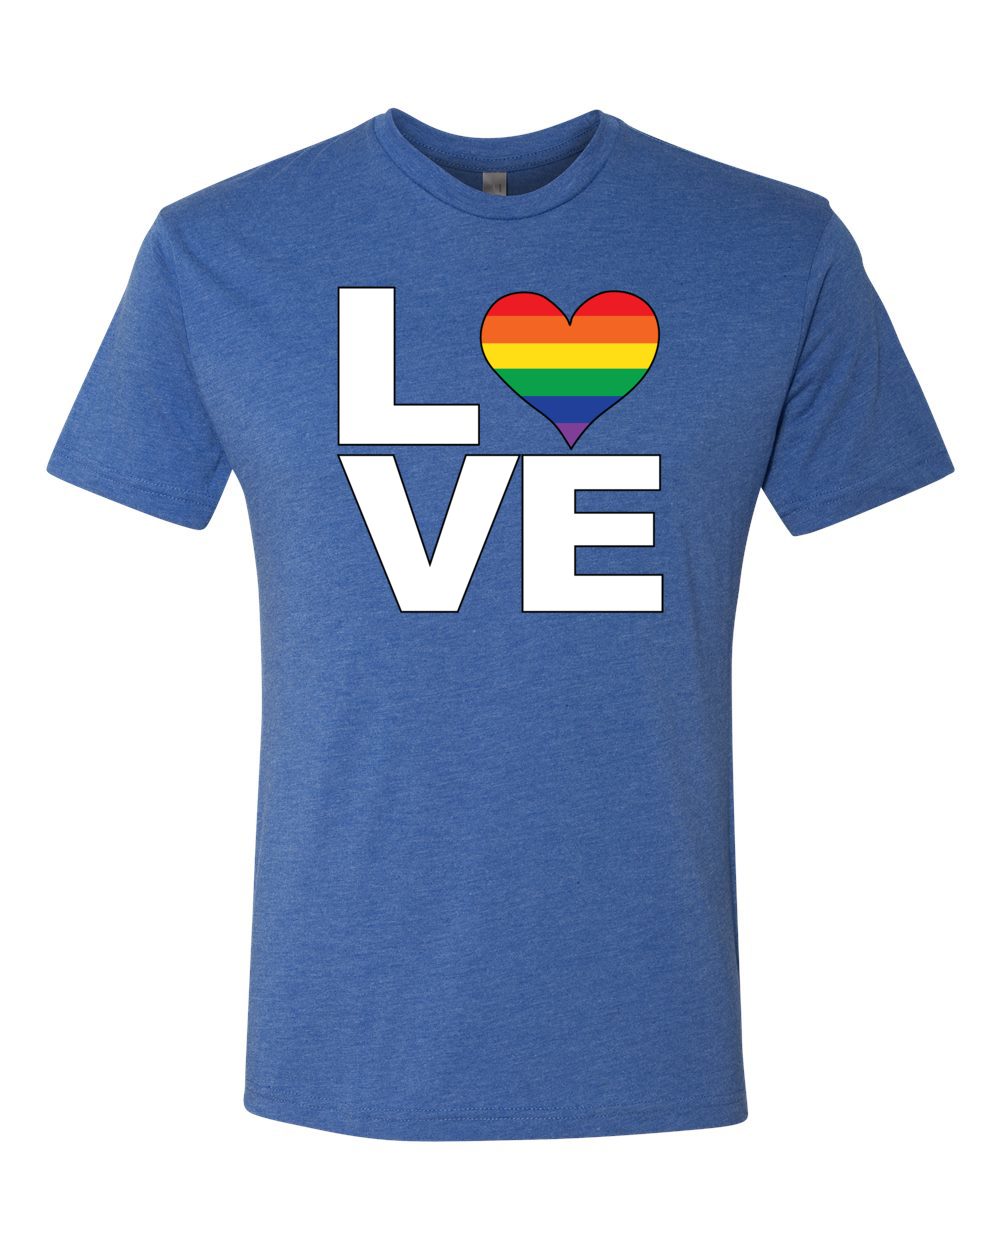 washington gay pride t shirts for sale